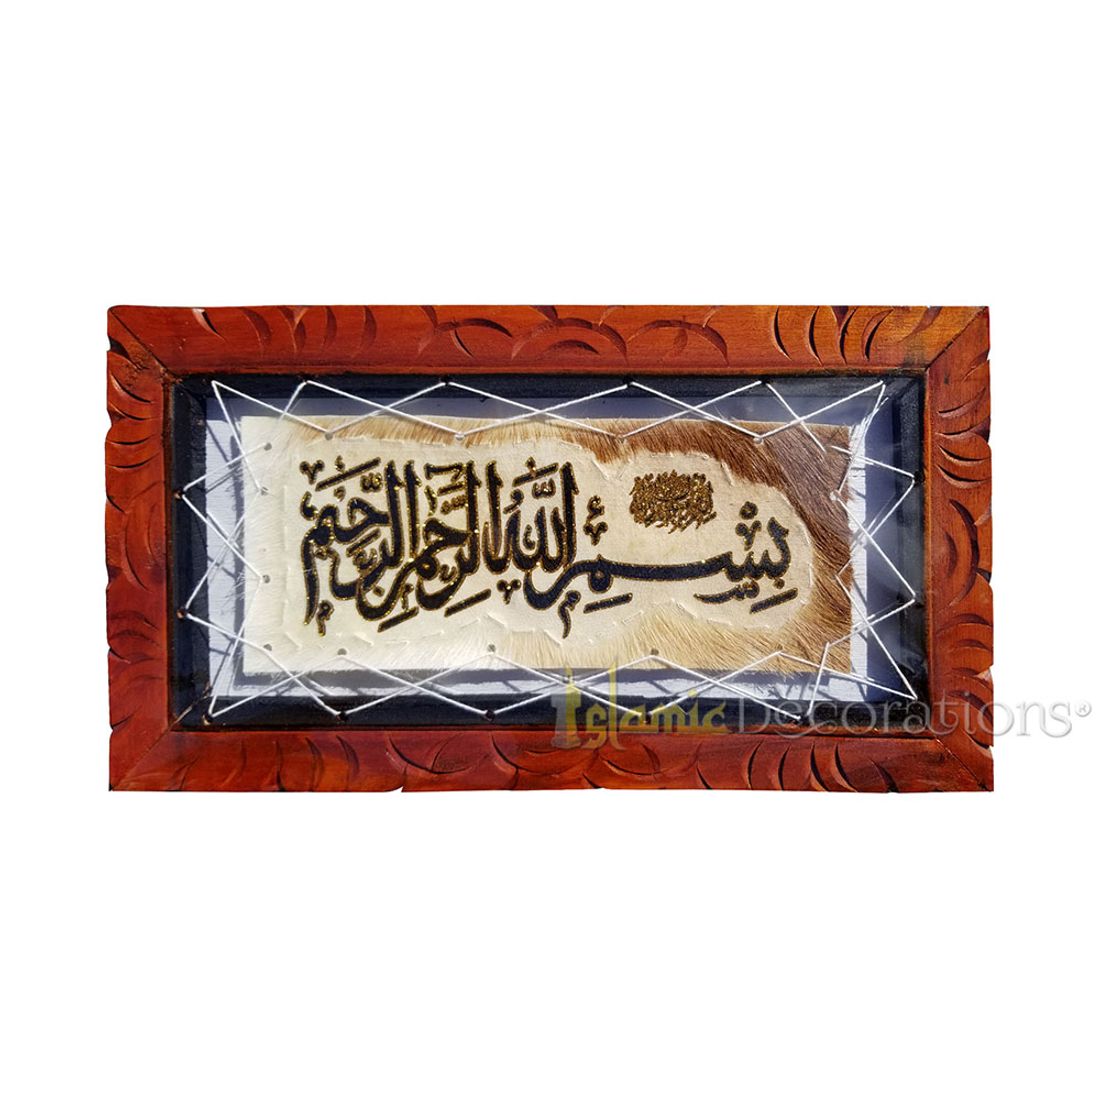 Small Basmallah Goat Hide Arabic Wall Hanging Islamic Calligraphy Rectangle 8.25 x 15 inch